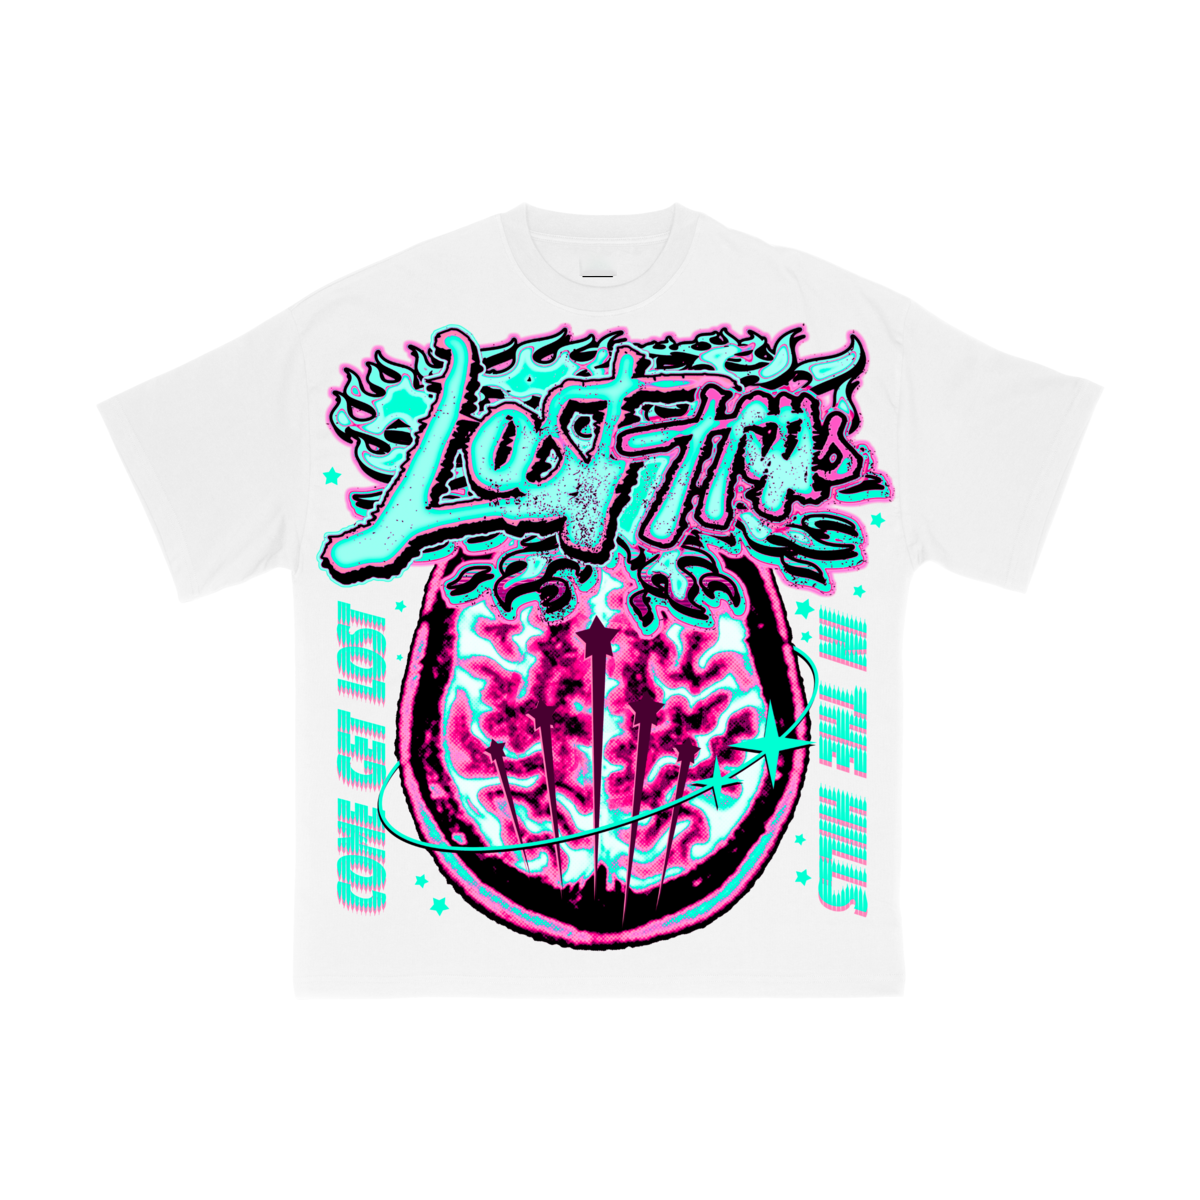 Retro Lost In The Hills Come Get Lost Graphics Cotton T-Shirt / TECHWEAR CLUB / Techwear